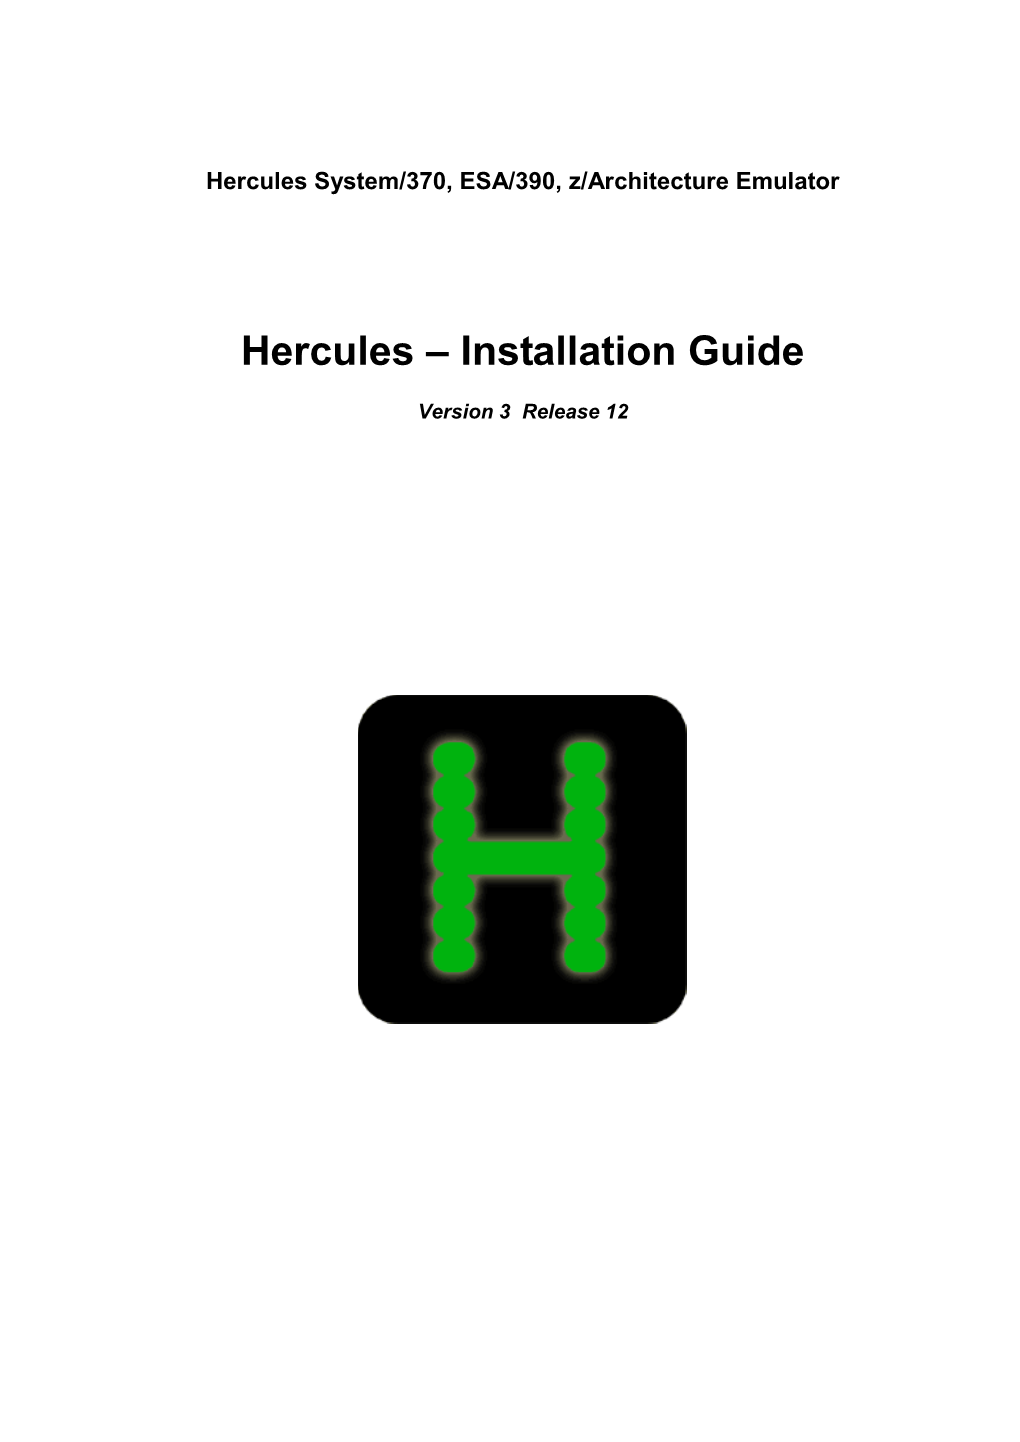 Hercules V3.12.0